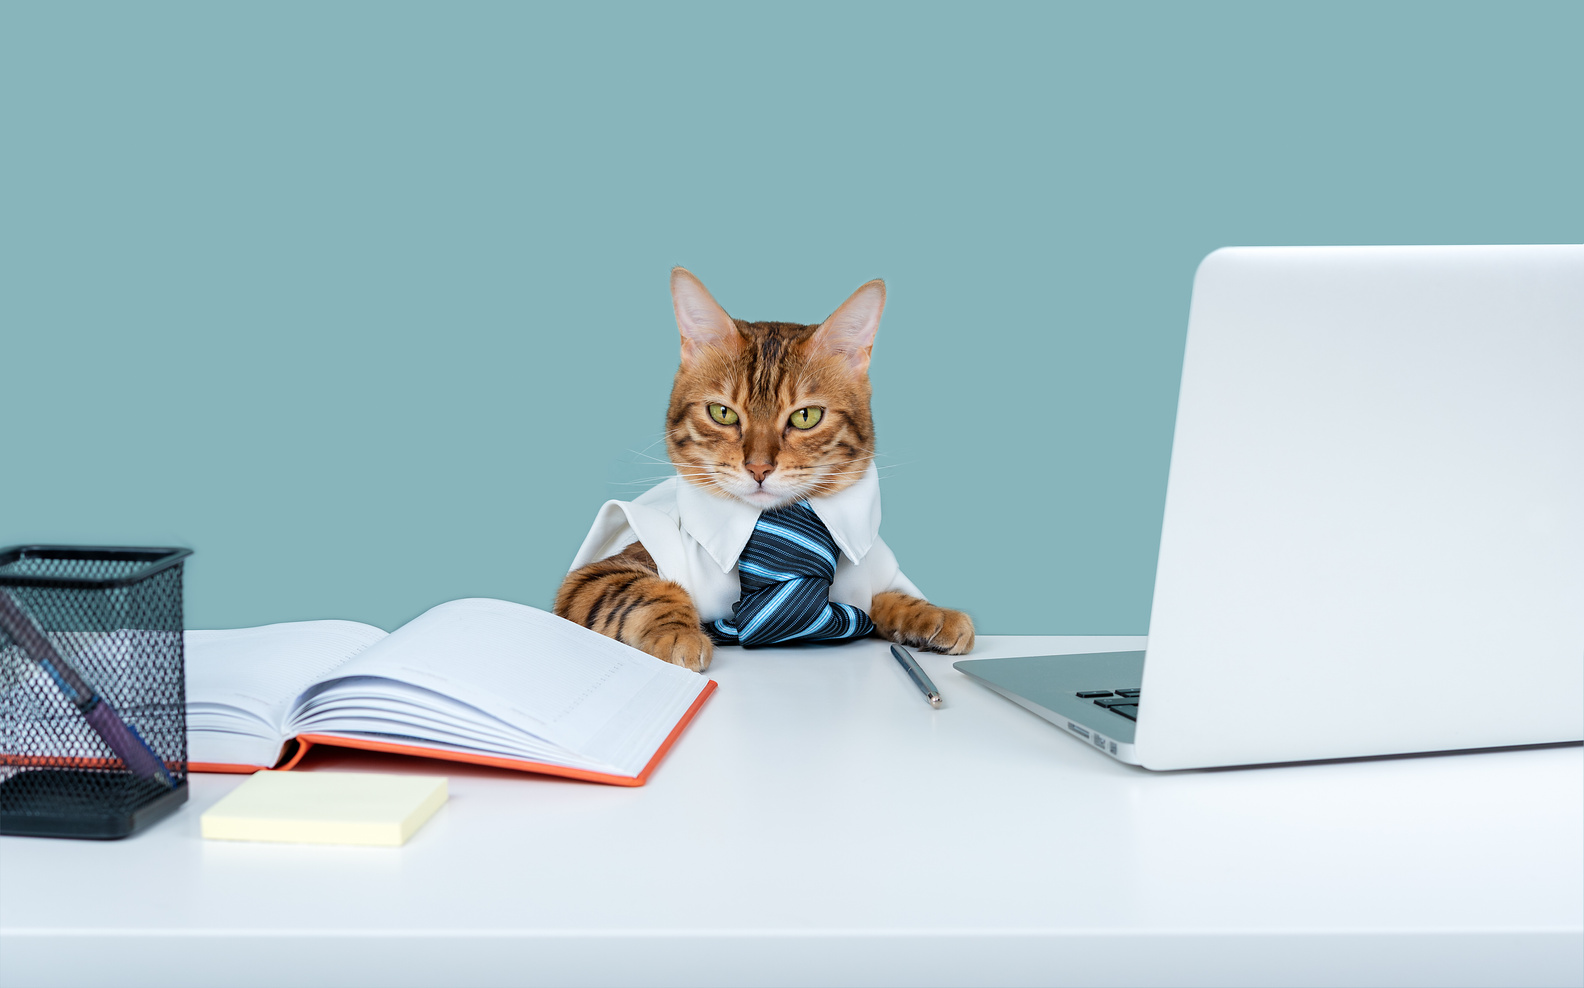 Boring Job. Bengal Cat Is a Business Entrepreneur. Cat in a Tie.